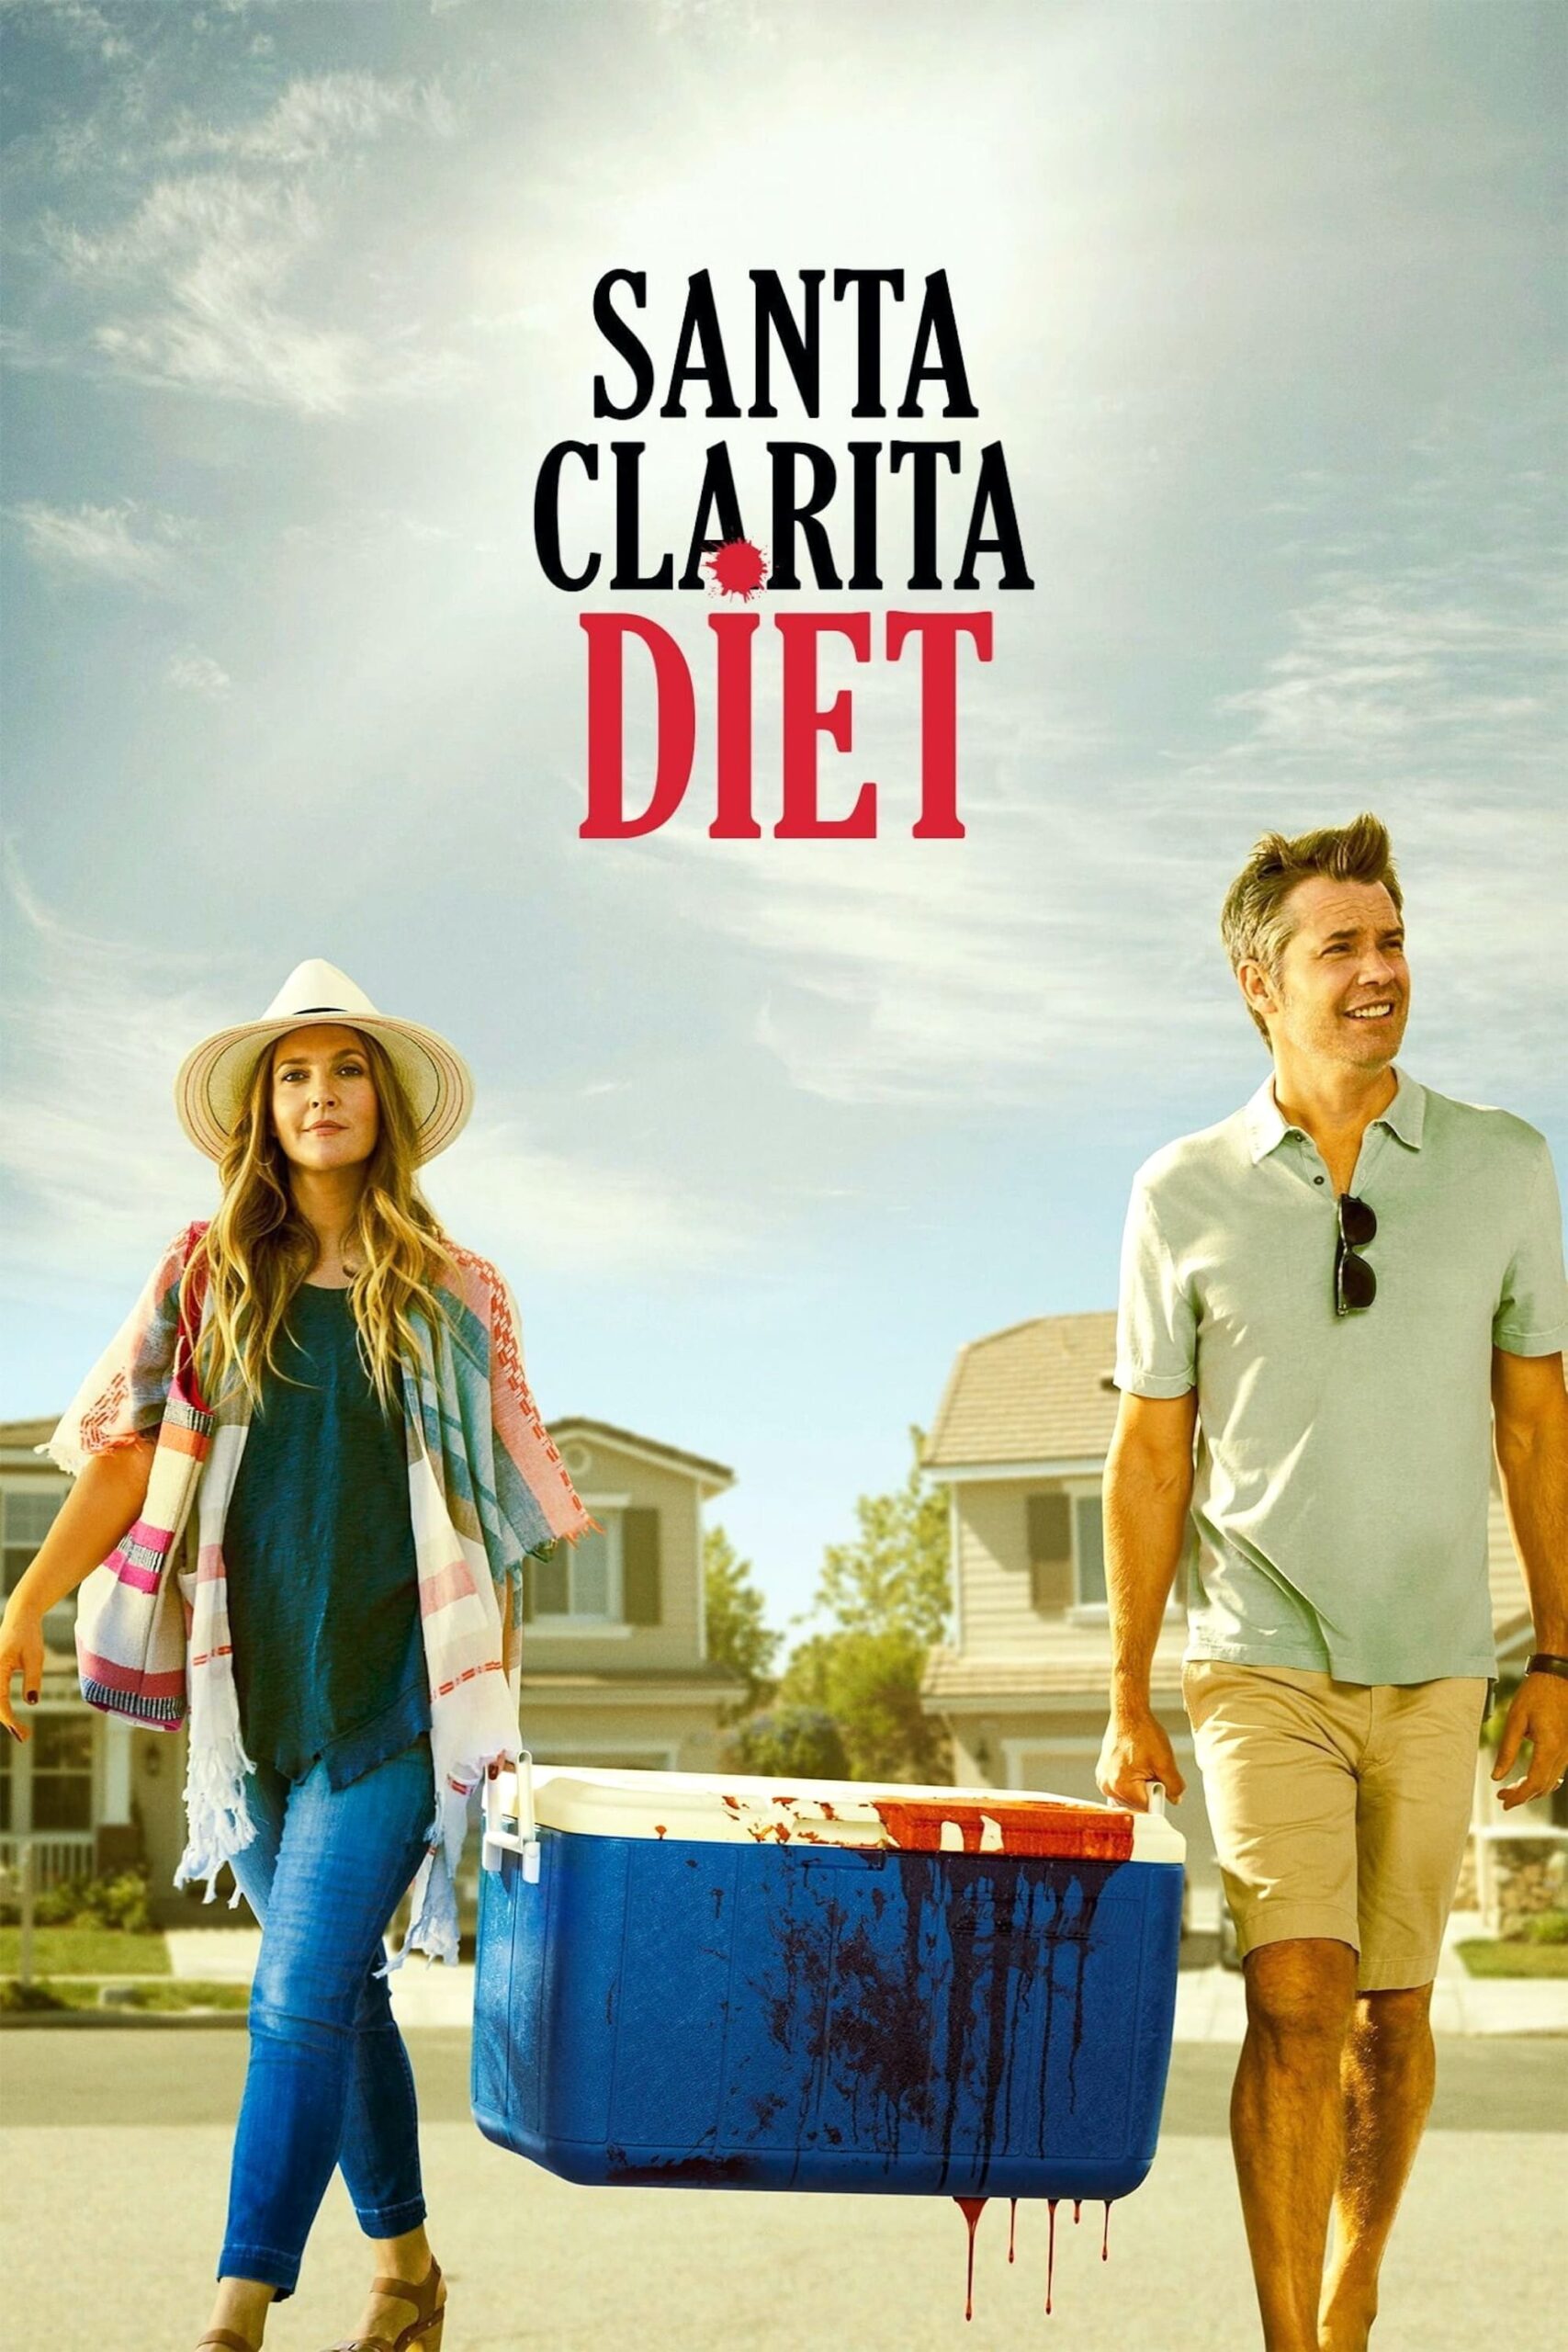 Plakát pro film “Santa Clarita Diet”